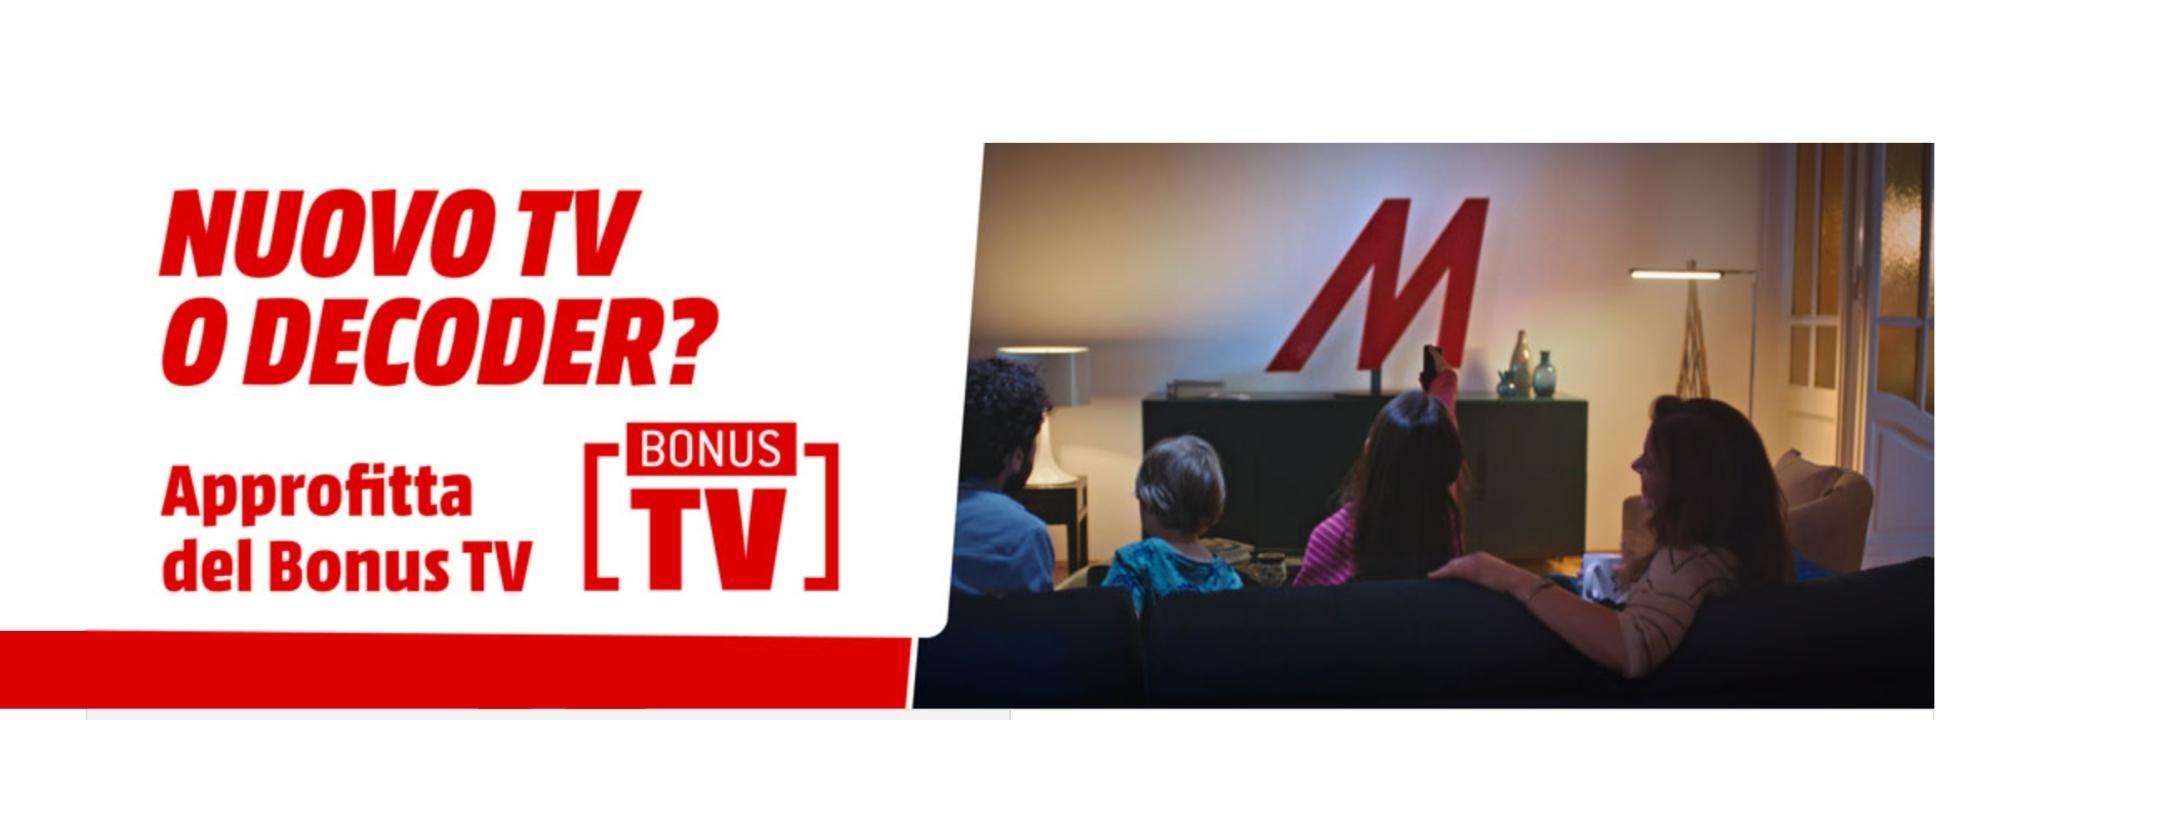 MediaWorld: acquista online e approfitta del Bonus TV